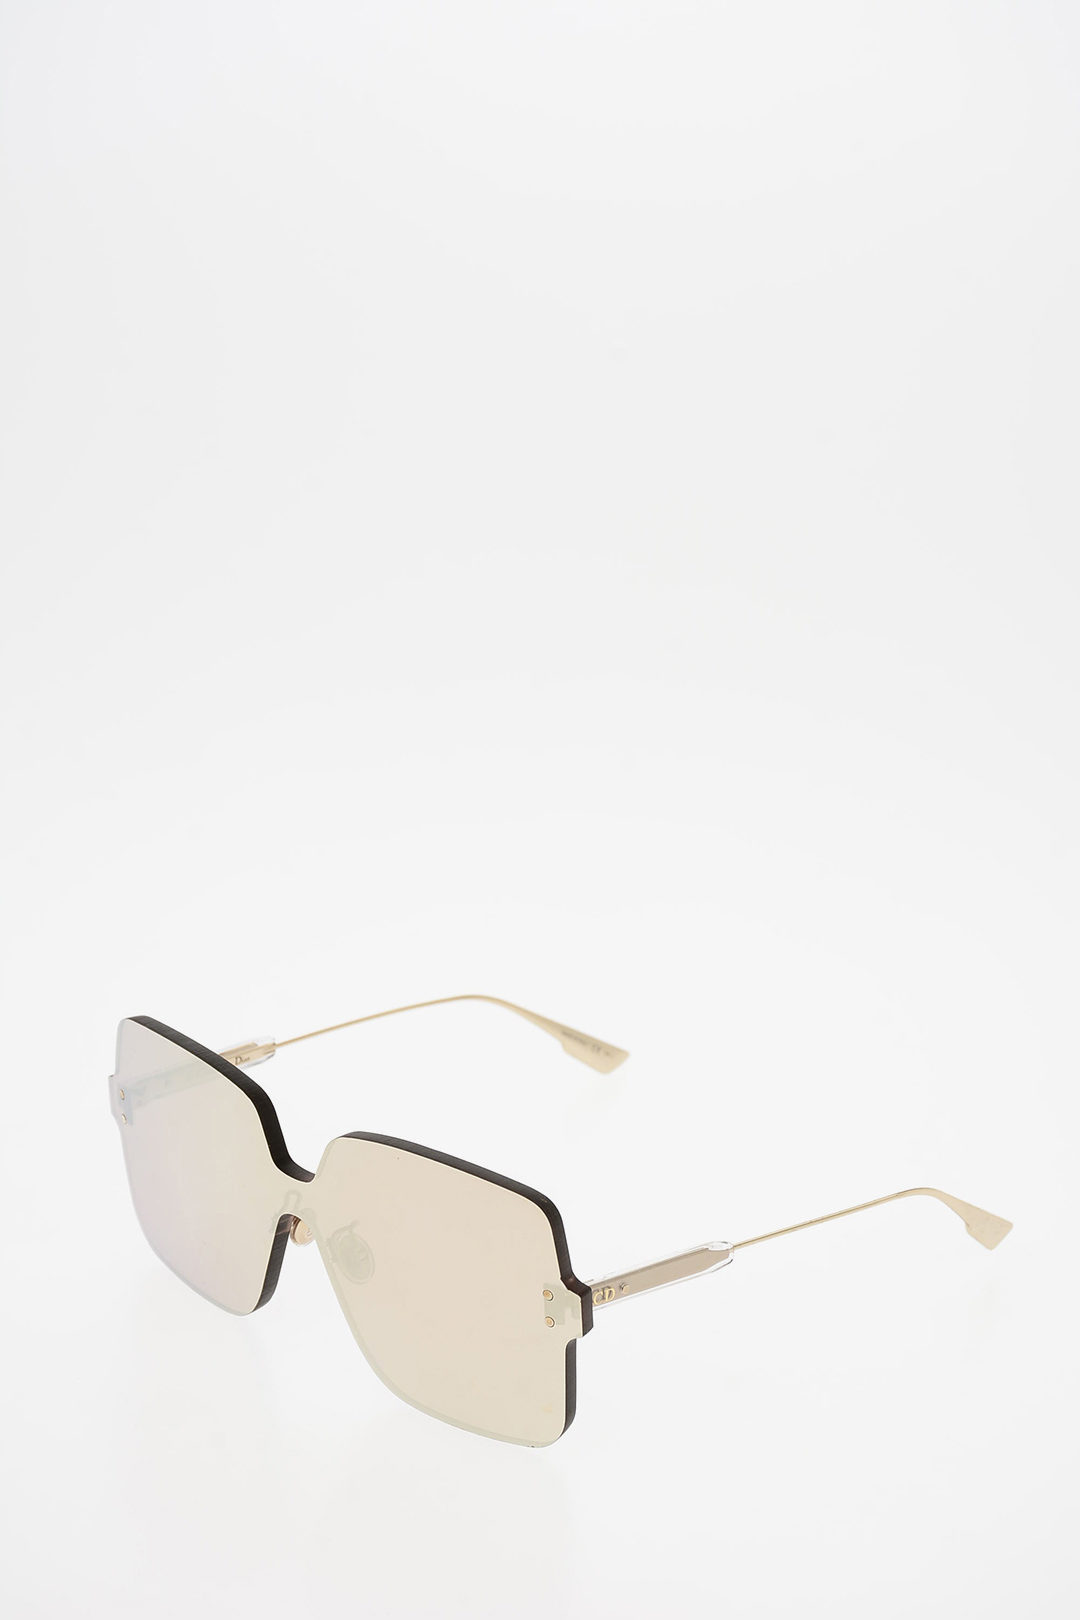 Dior Color Quake Grey Silver Mirror Rectangular Ladies Sunglasses Dior Color